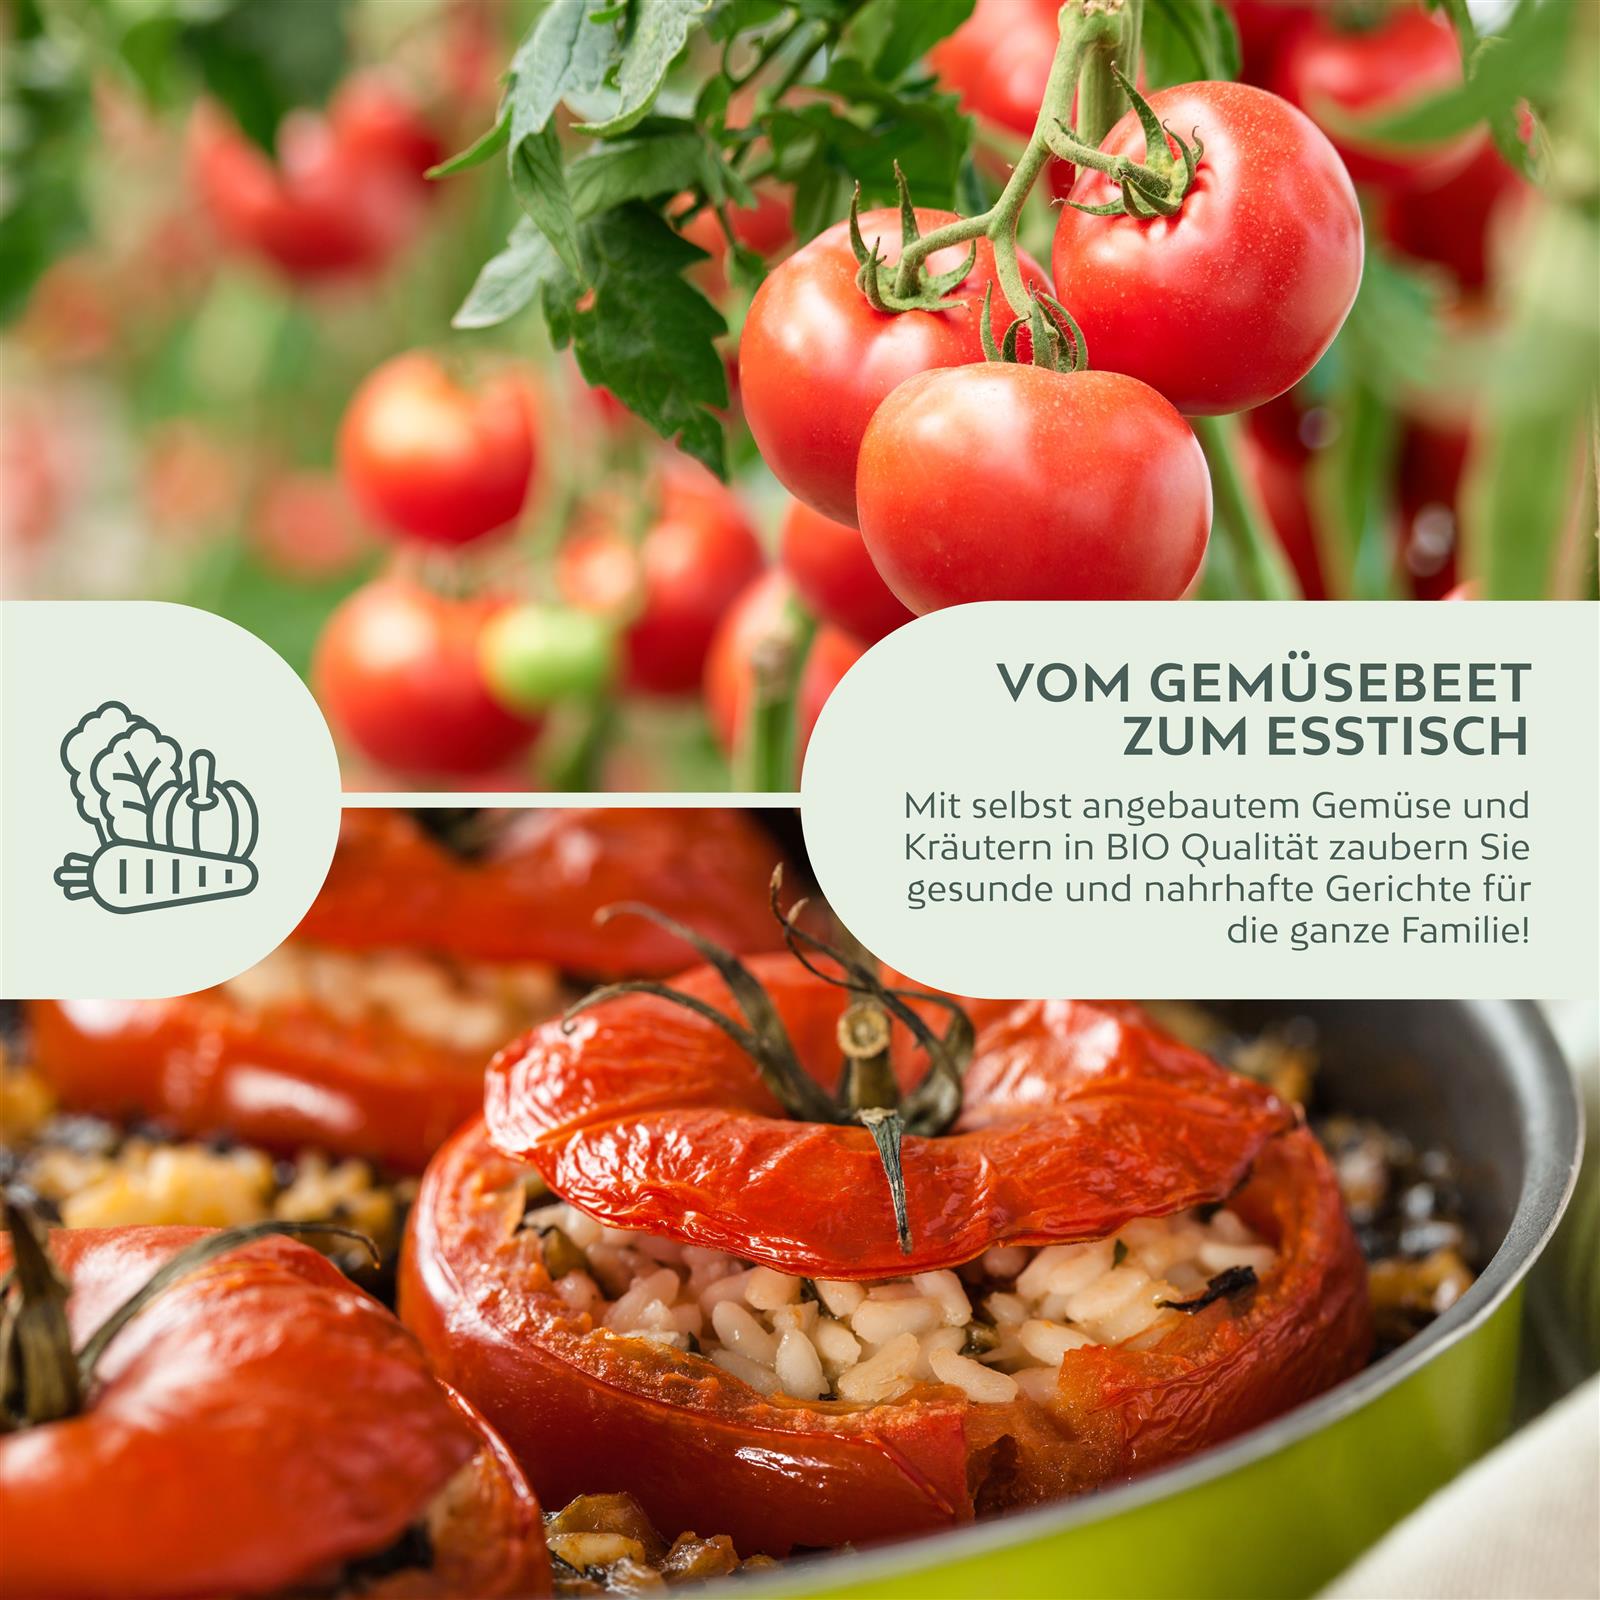 BIO Tomatensamen (Berner Rose) - Tomaten Saatgut aus biologischem Anbau (10 Korn)